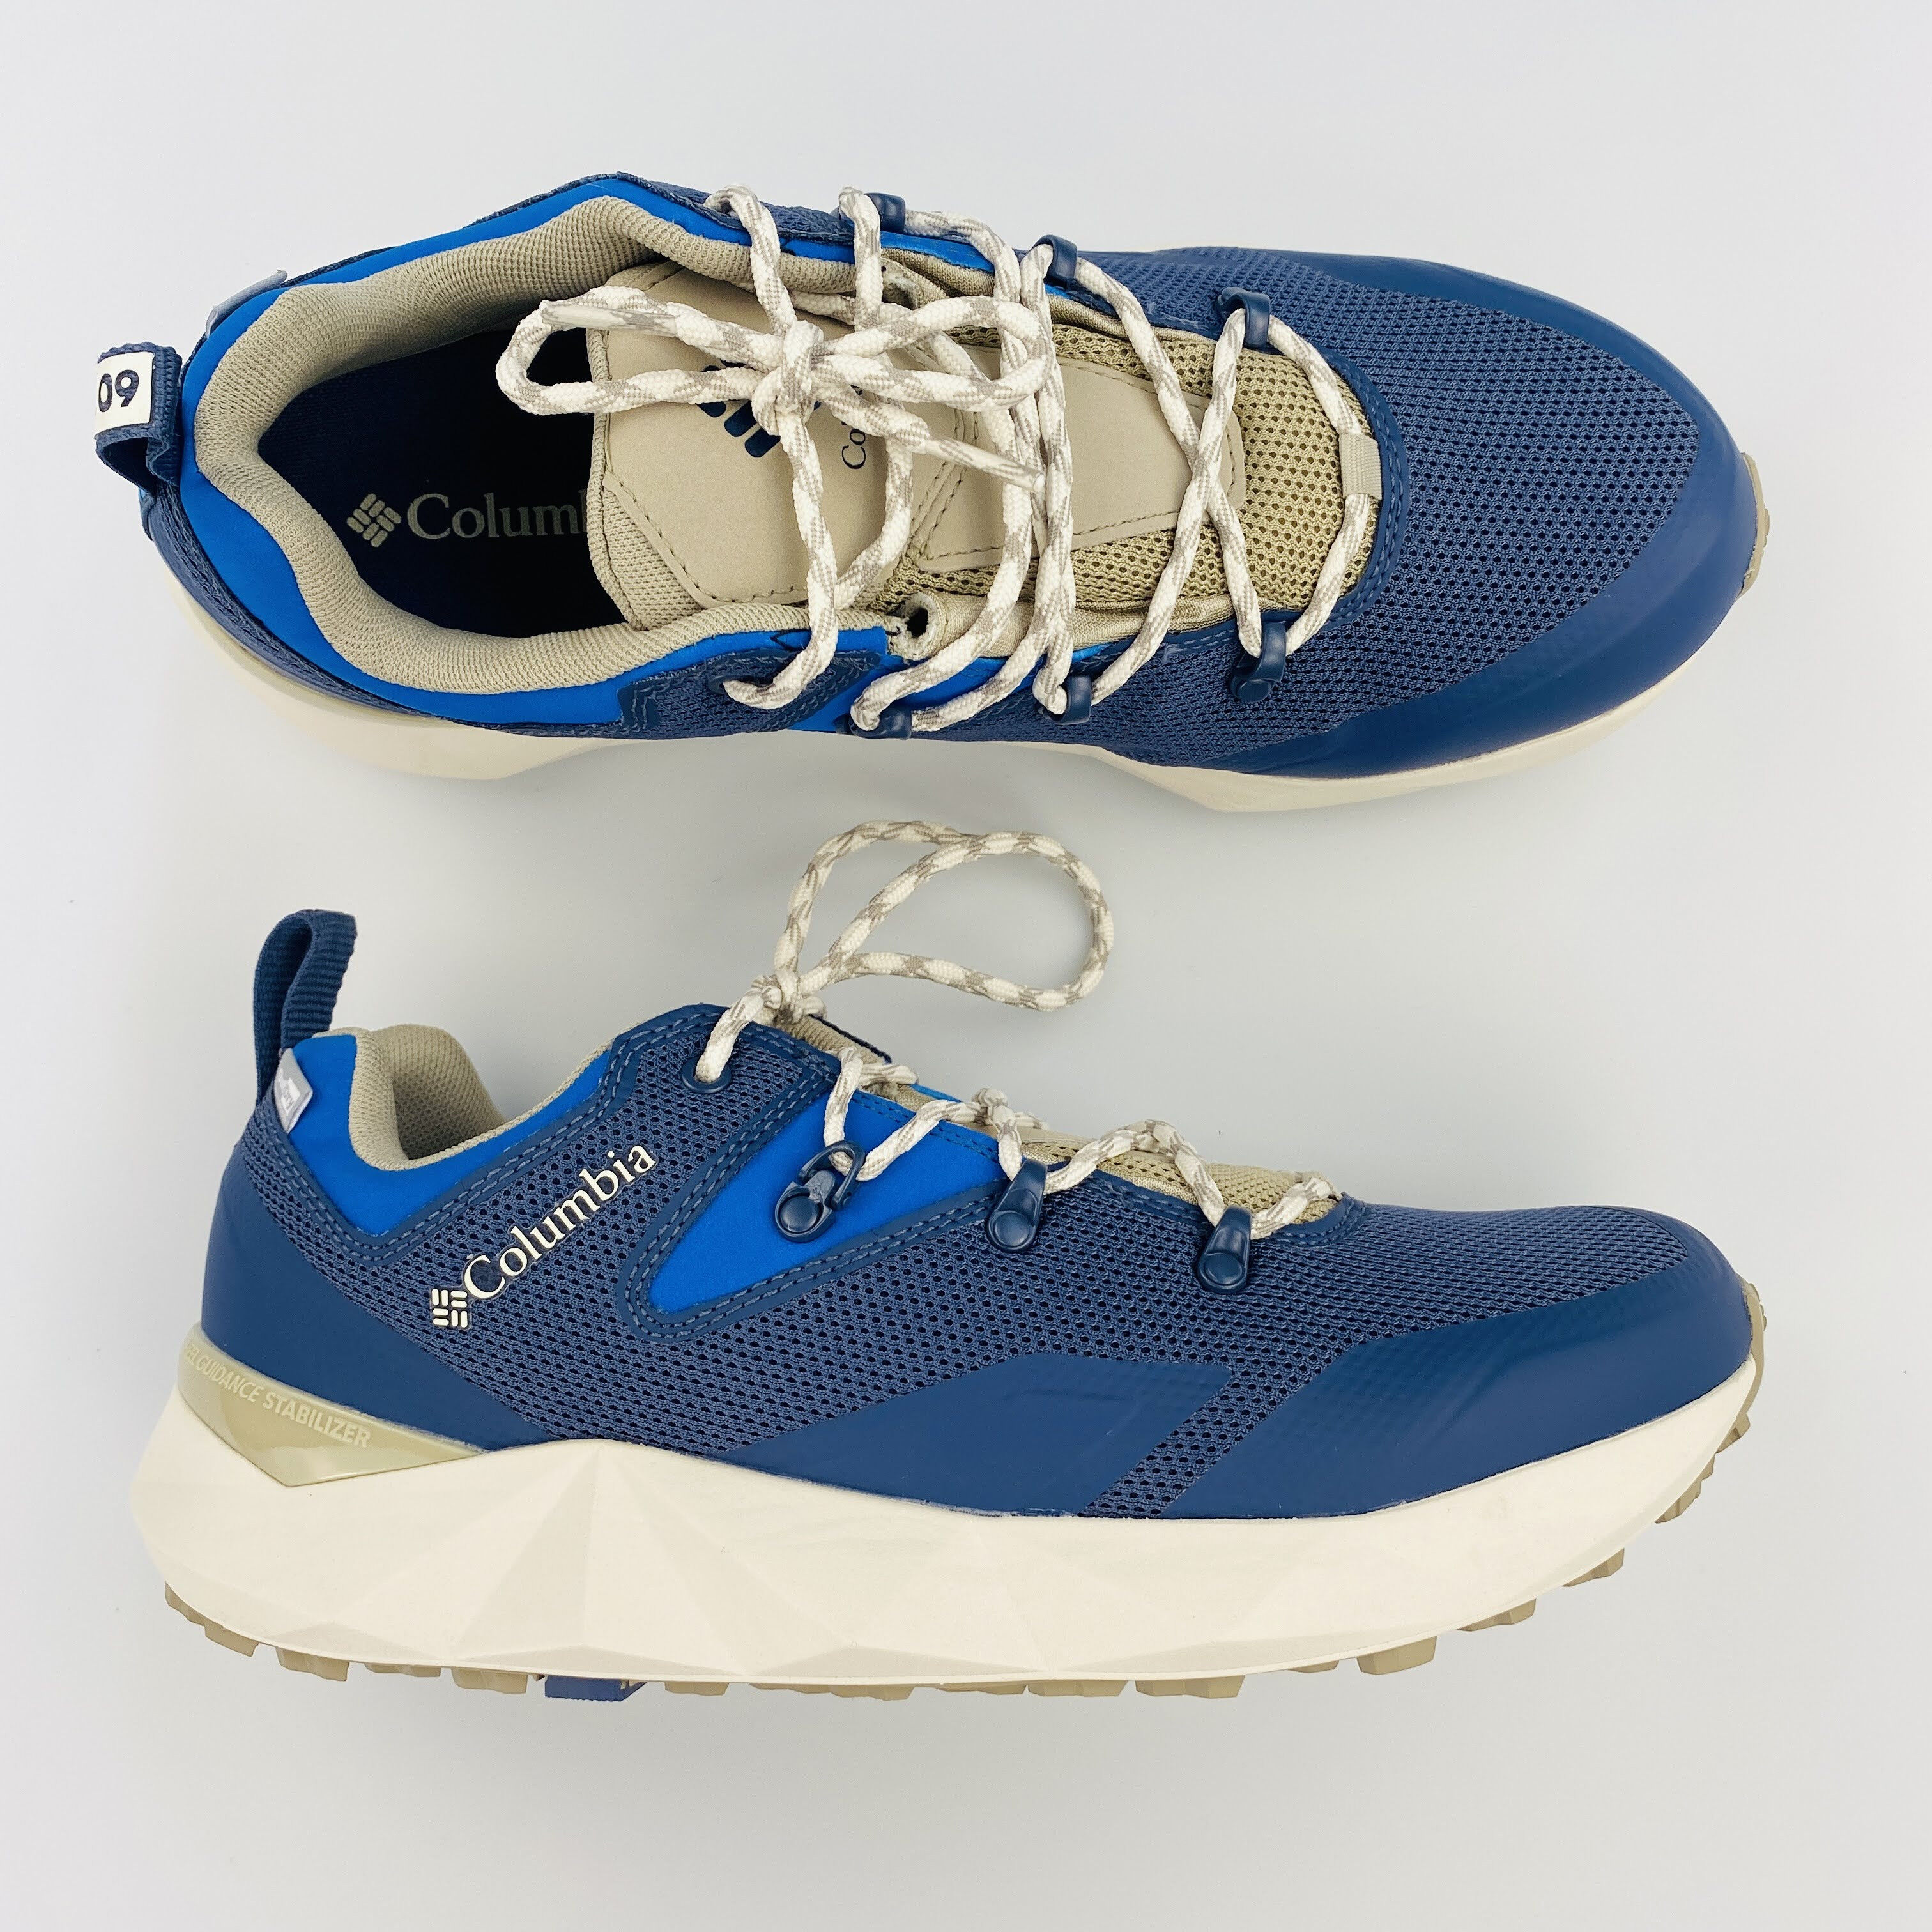 Columbia Facet 60 Low Outdry - Seconde main Chaussures randonnée homme - Bleu - 42 | Hardloop